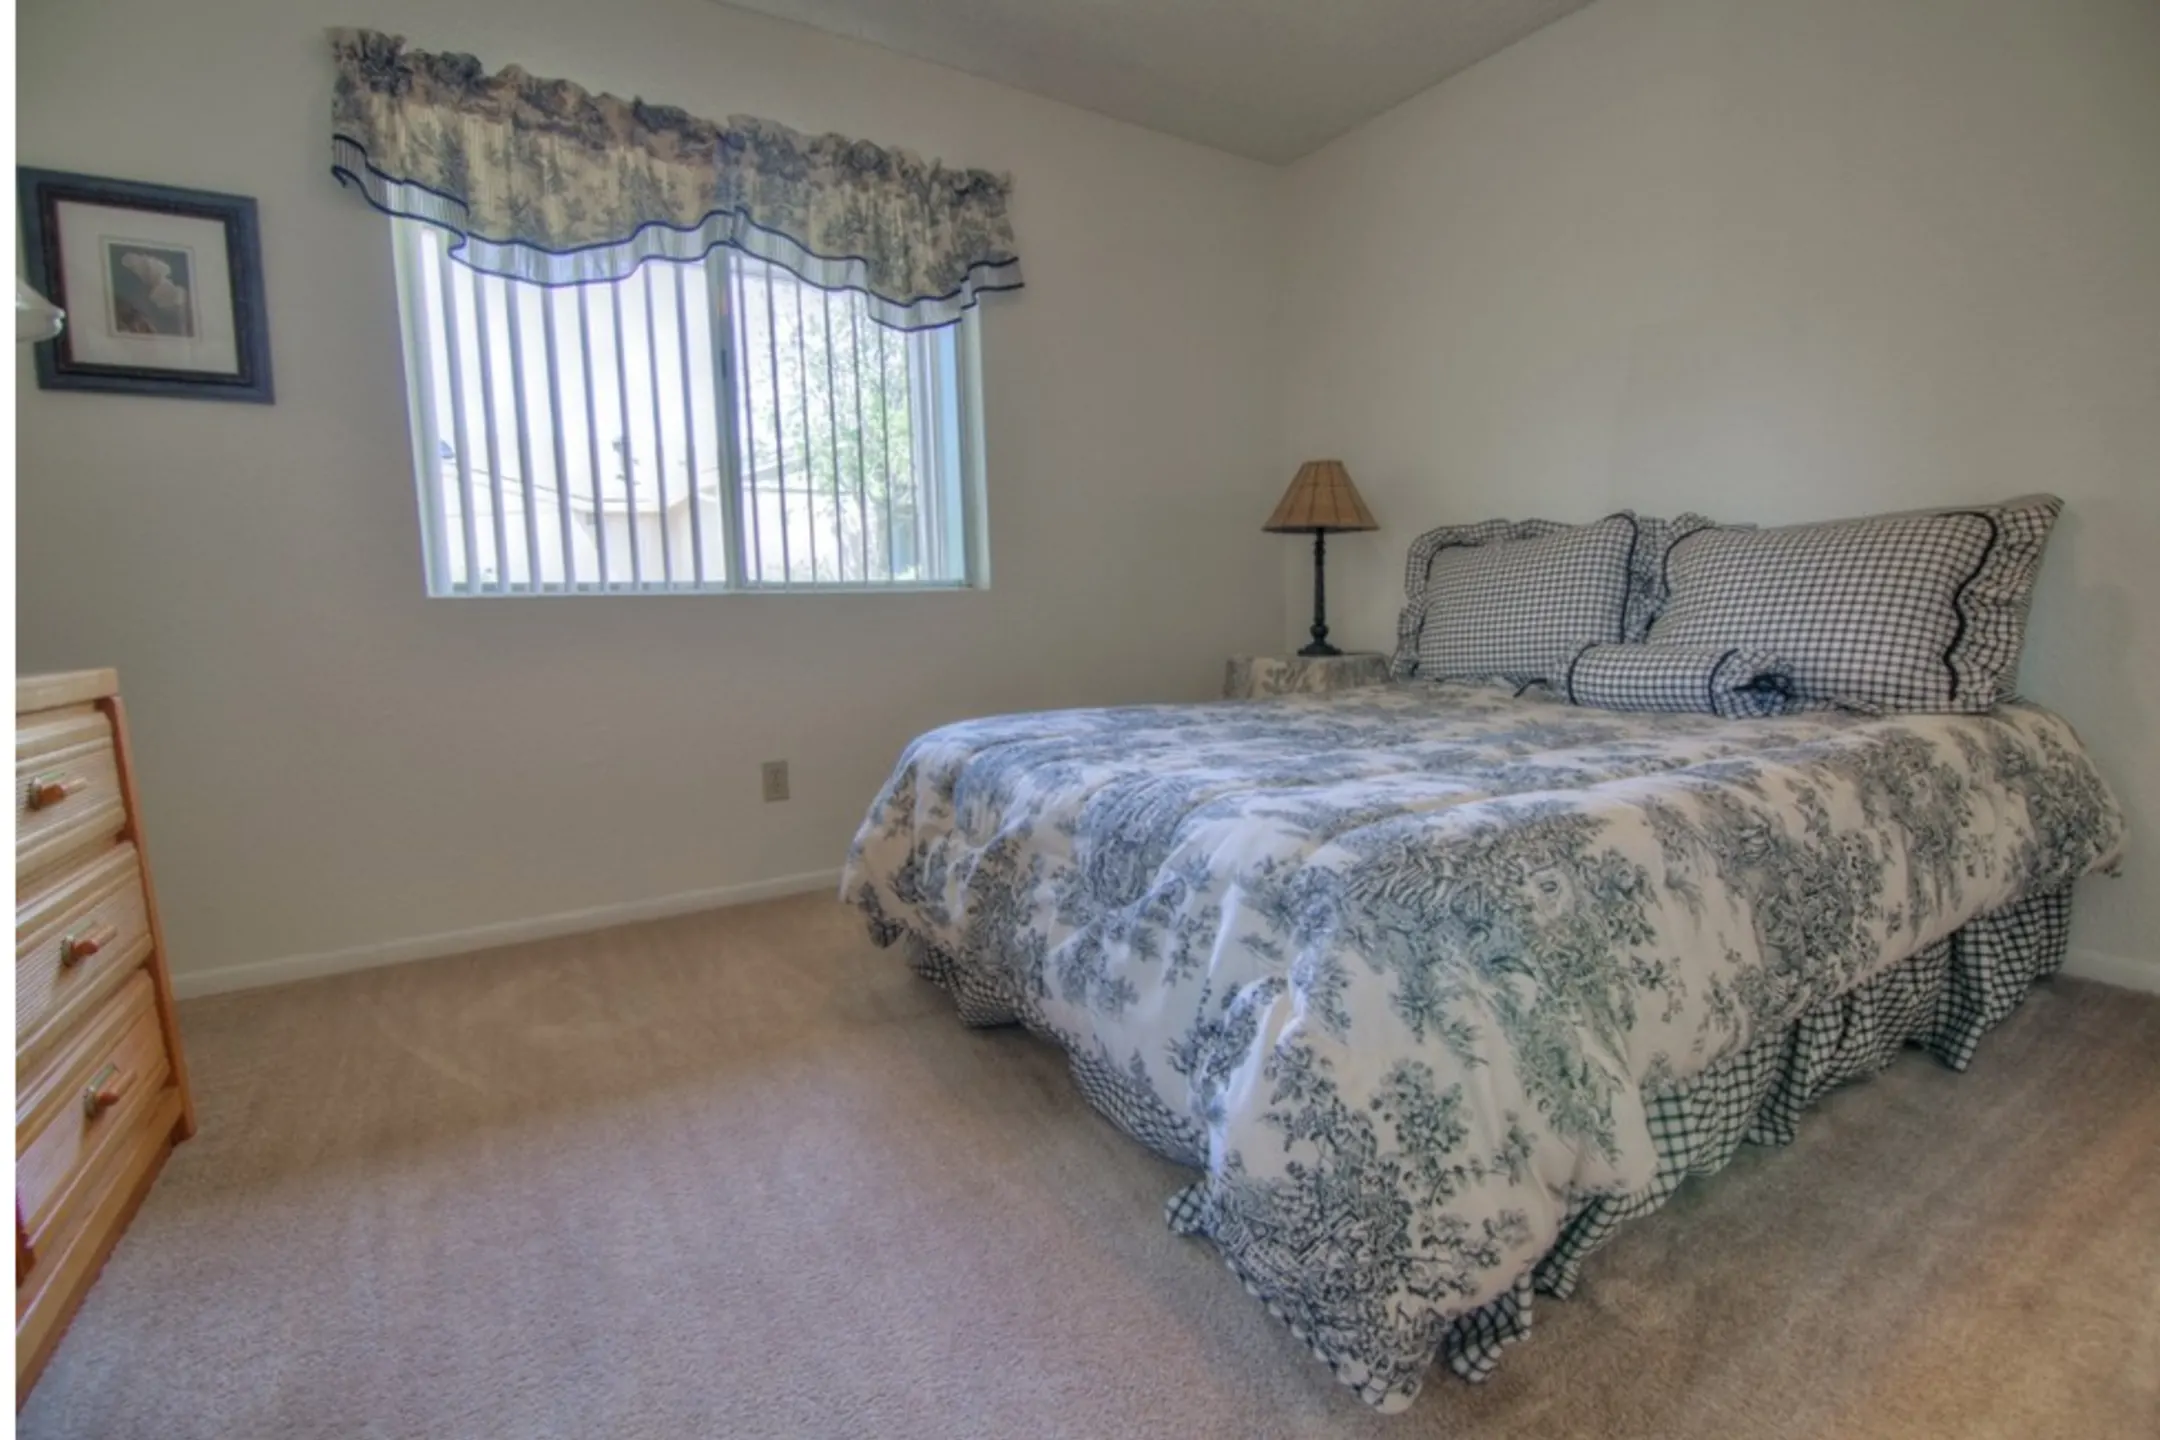 Bedroom - Country Club Terrace - Flagstaff, AZ